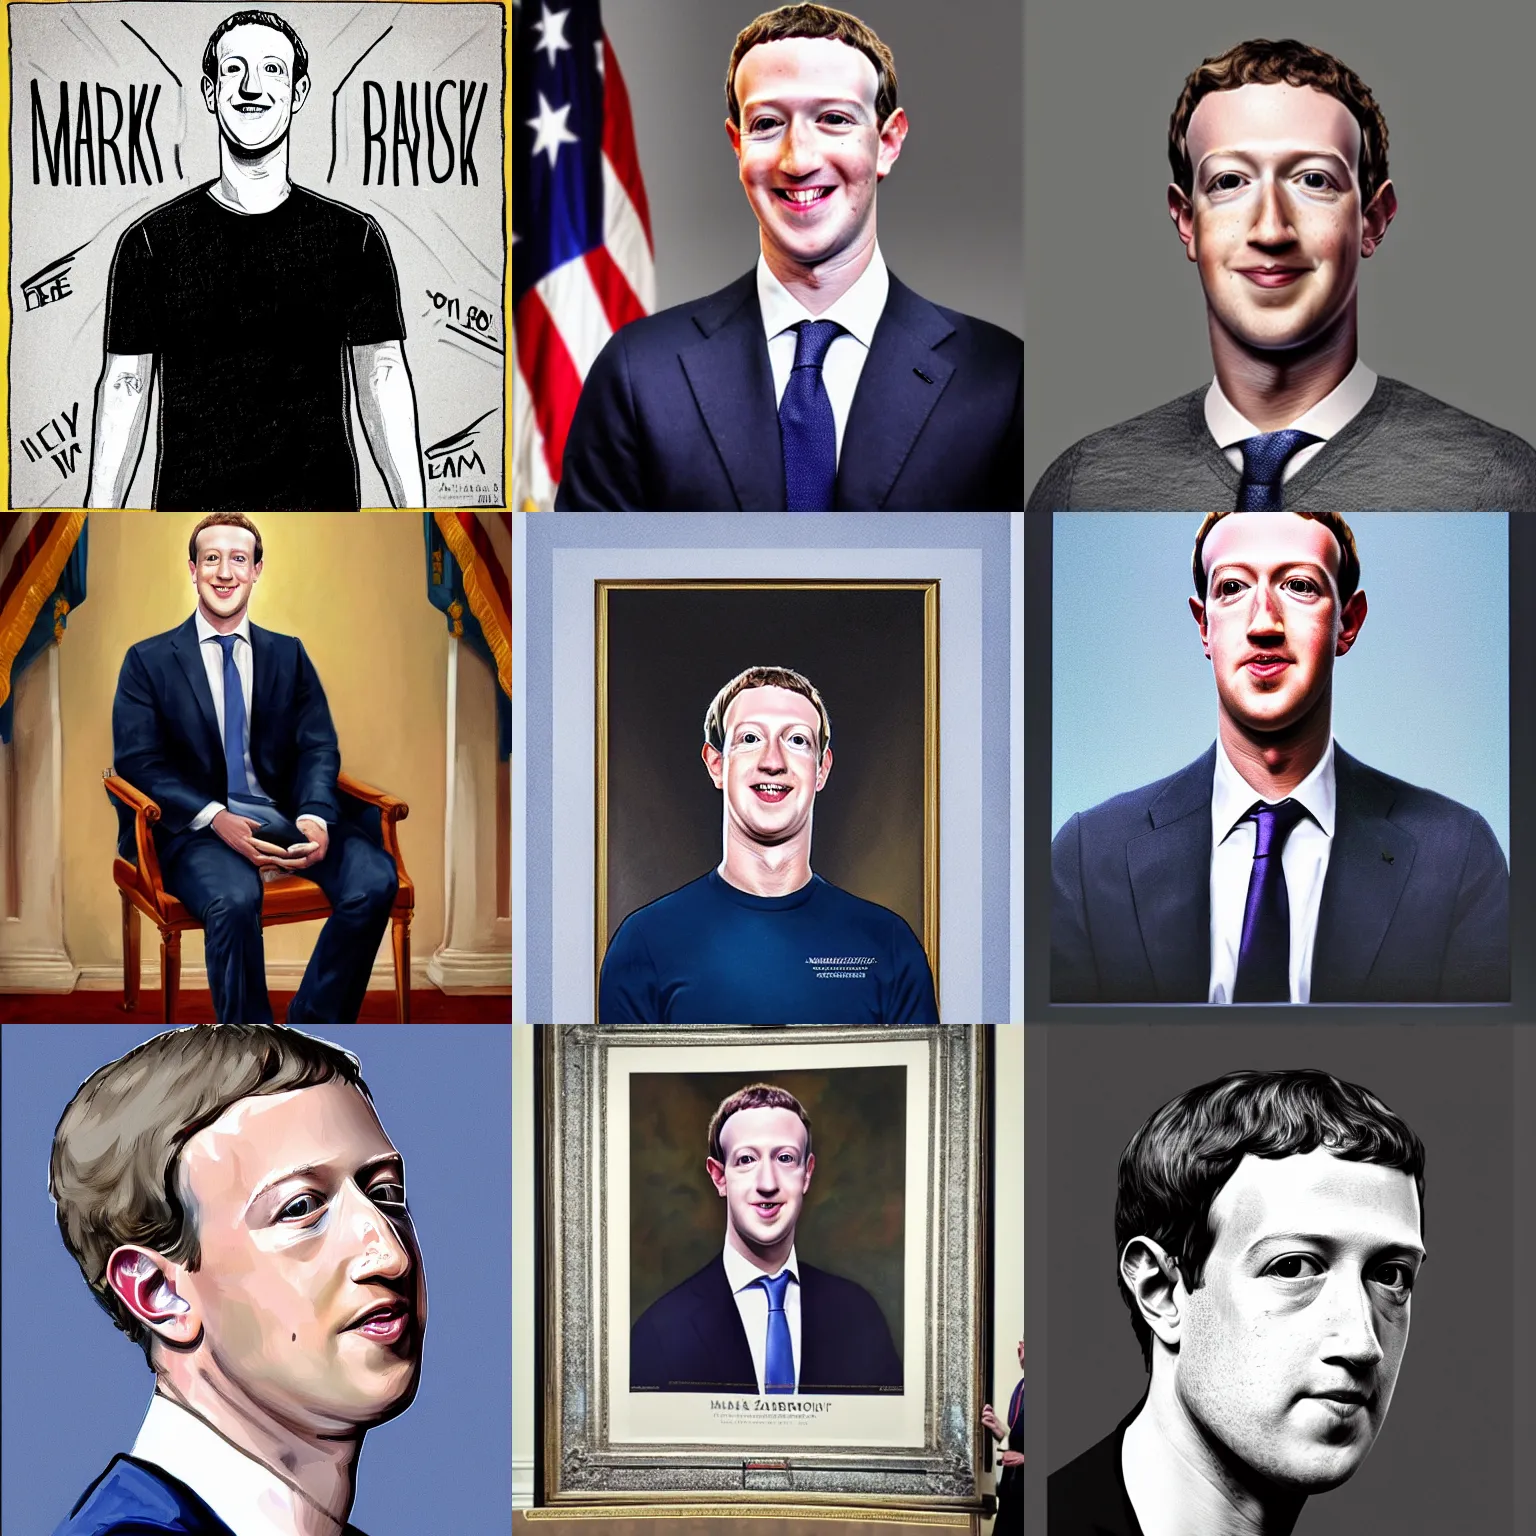 Prompt: Mark Zuckerberg presidential portrait